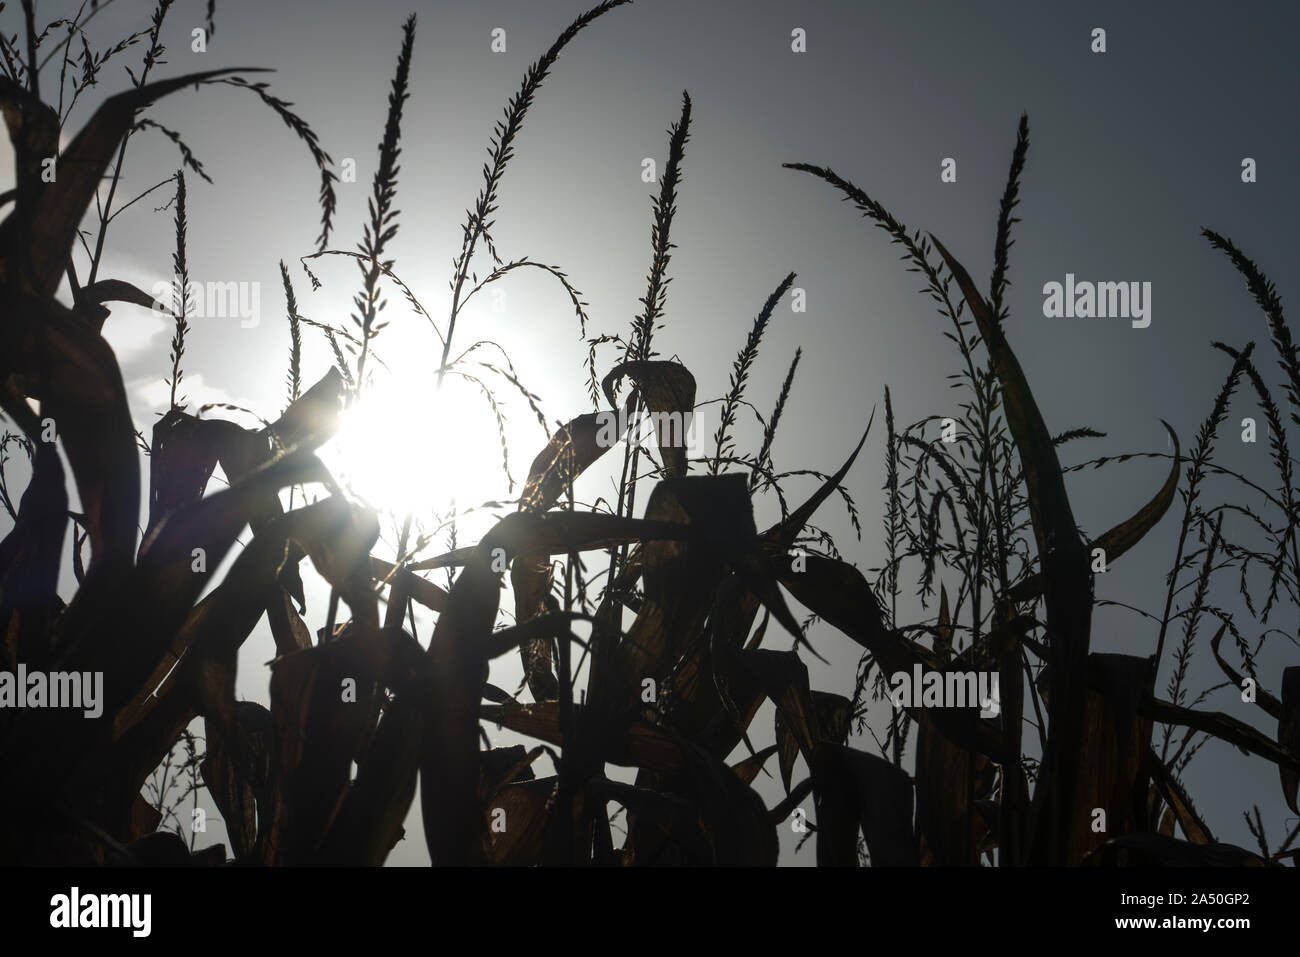 Ripe cornfield in ottobre, mangimi, Oberweser, Weser Uplands, Hesse, Germania, Europa Foto Stock